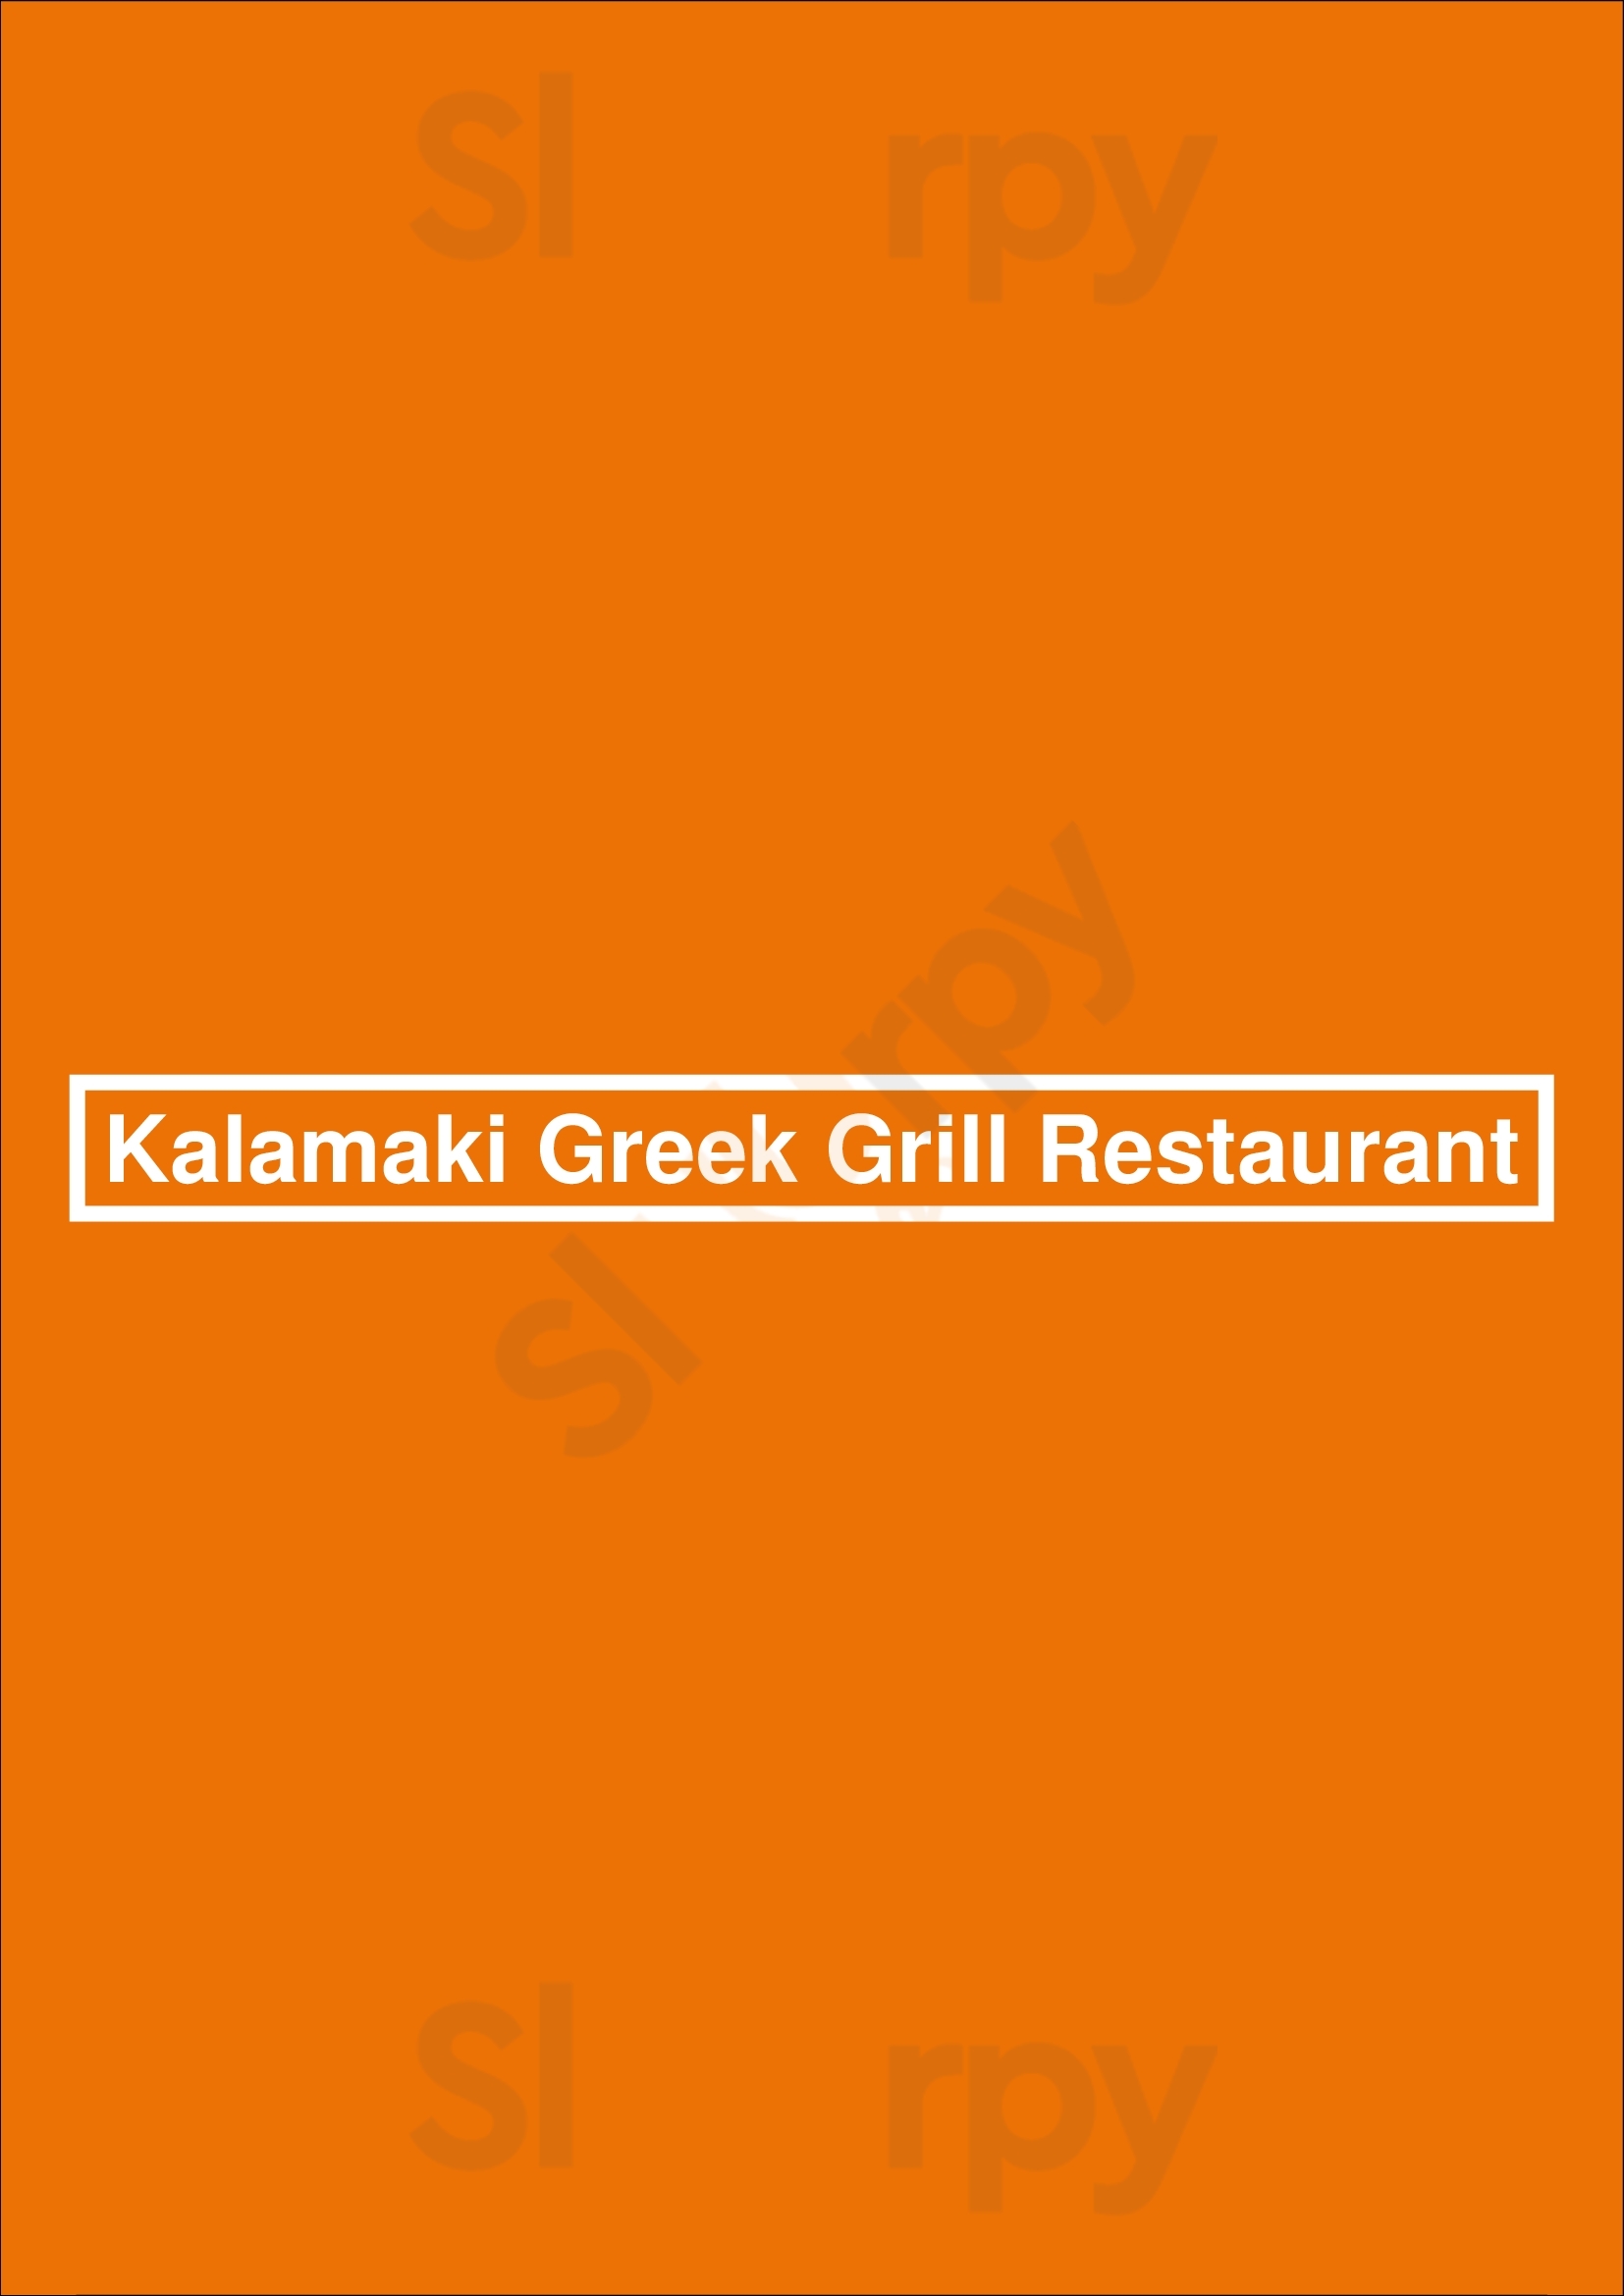 Kalamaki Greek Grill Restaurant Surrey Menu - 1